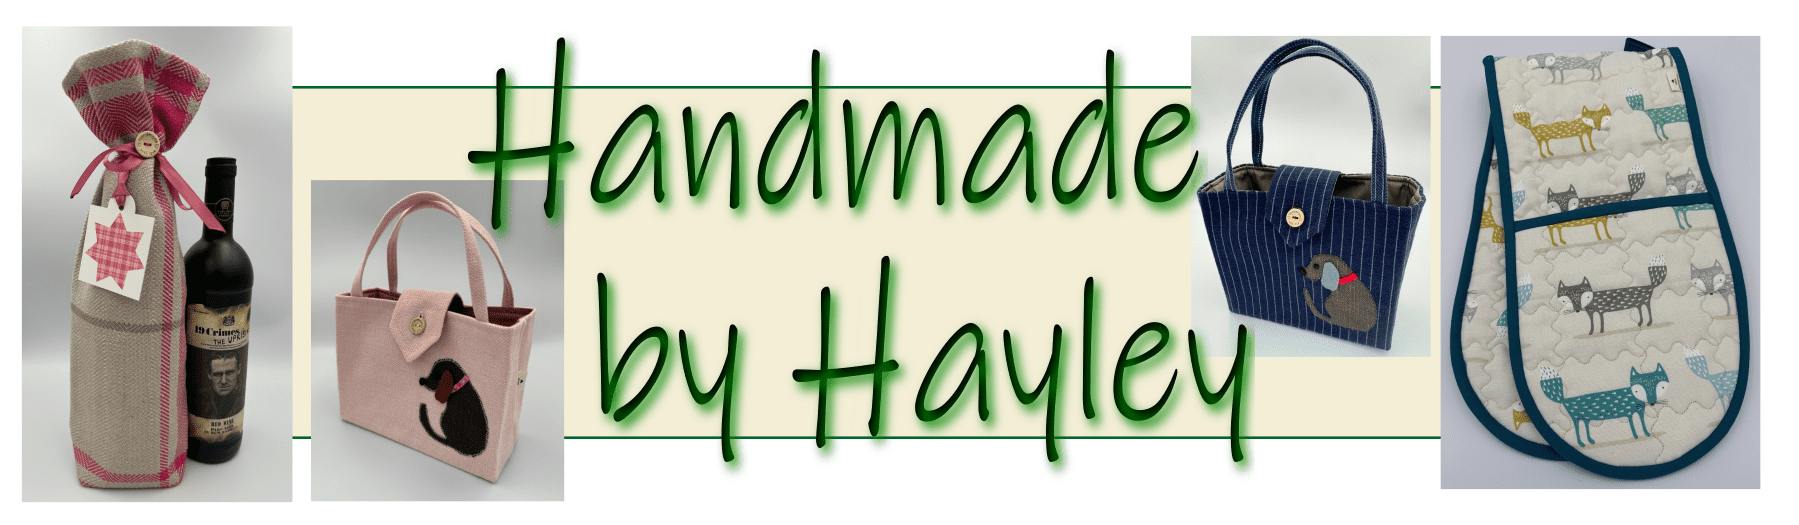 Handmade by Hayley